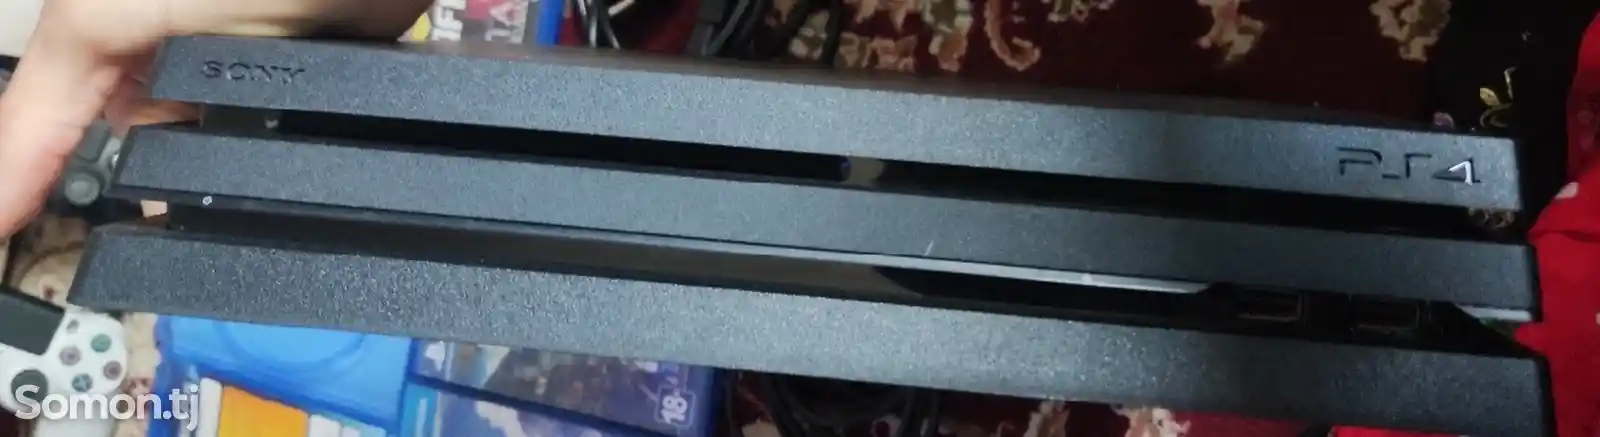 Игровая приставка Sony PlayStation 4 pro 1tb 9.60 FULL HD 4K-9